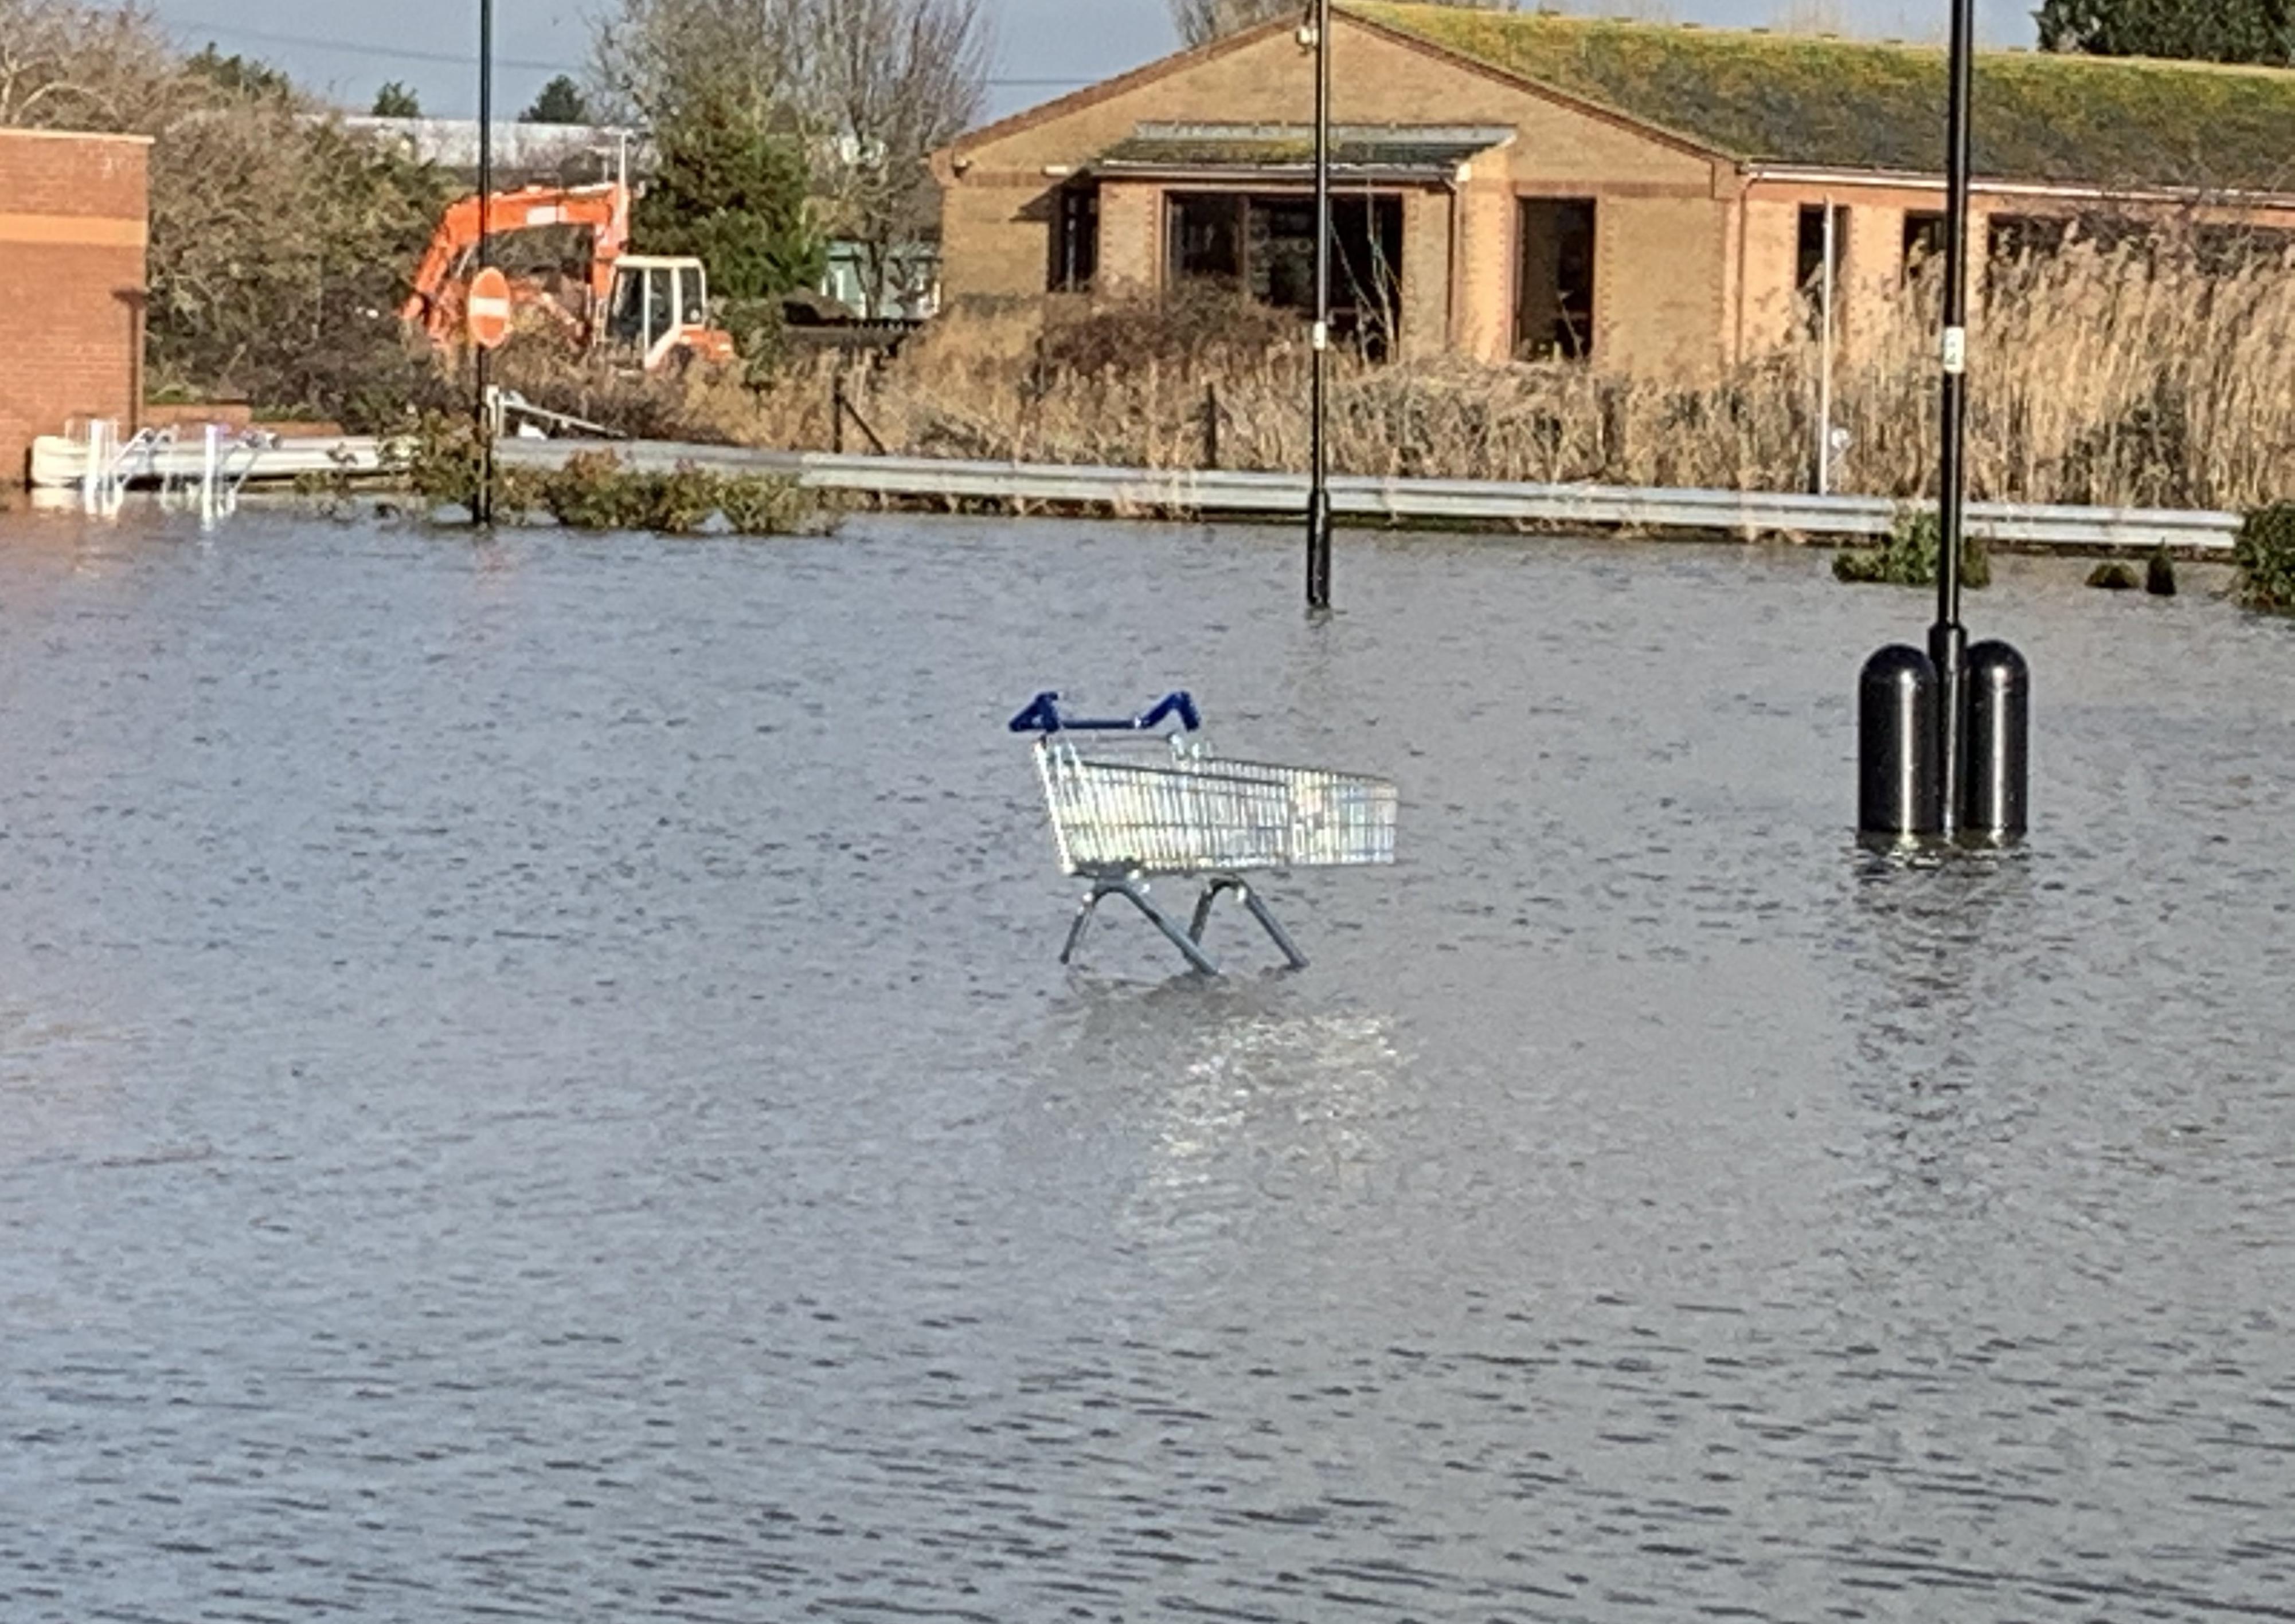 Tesco’s car park in Bognor Regis has been left under water after more flooding over the weekend. SUS-191223-143656001